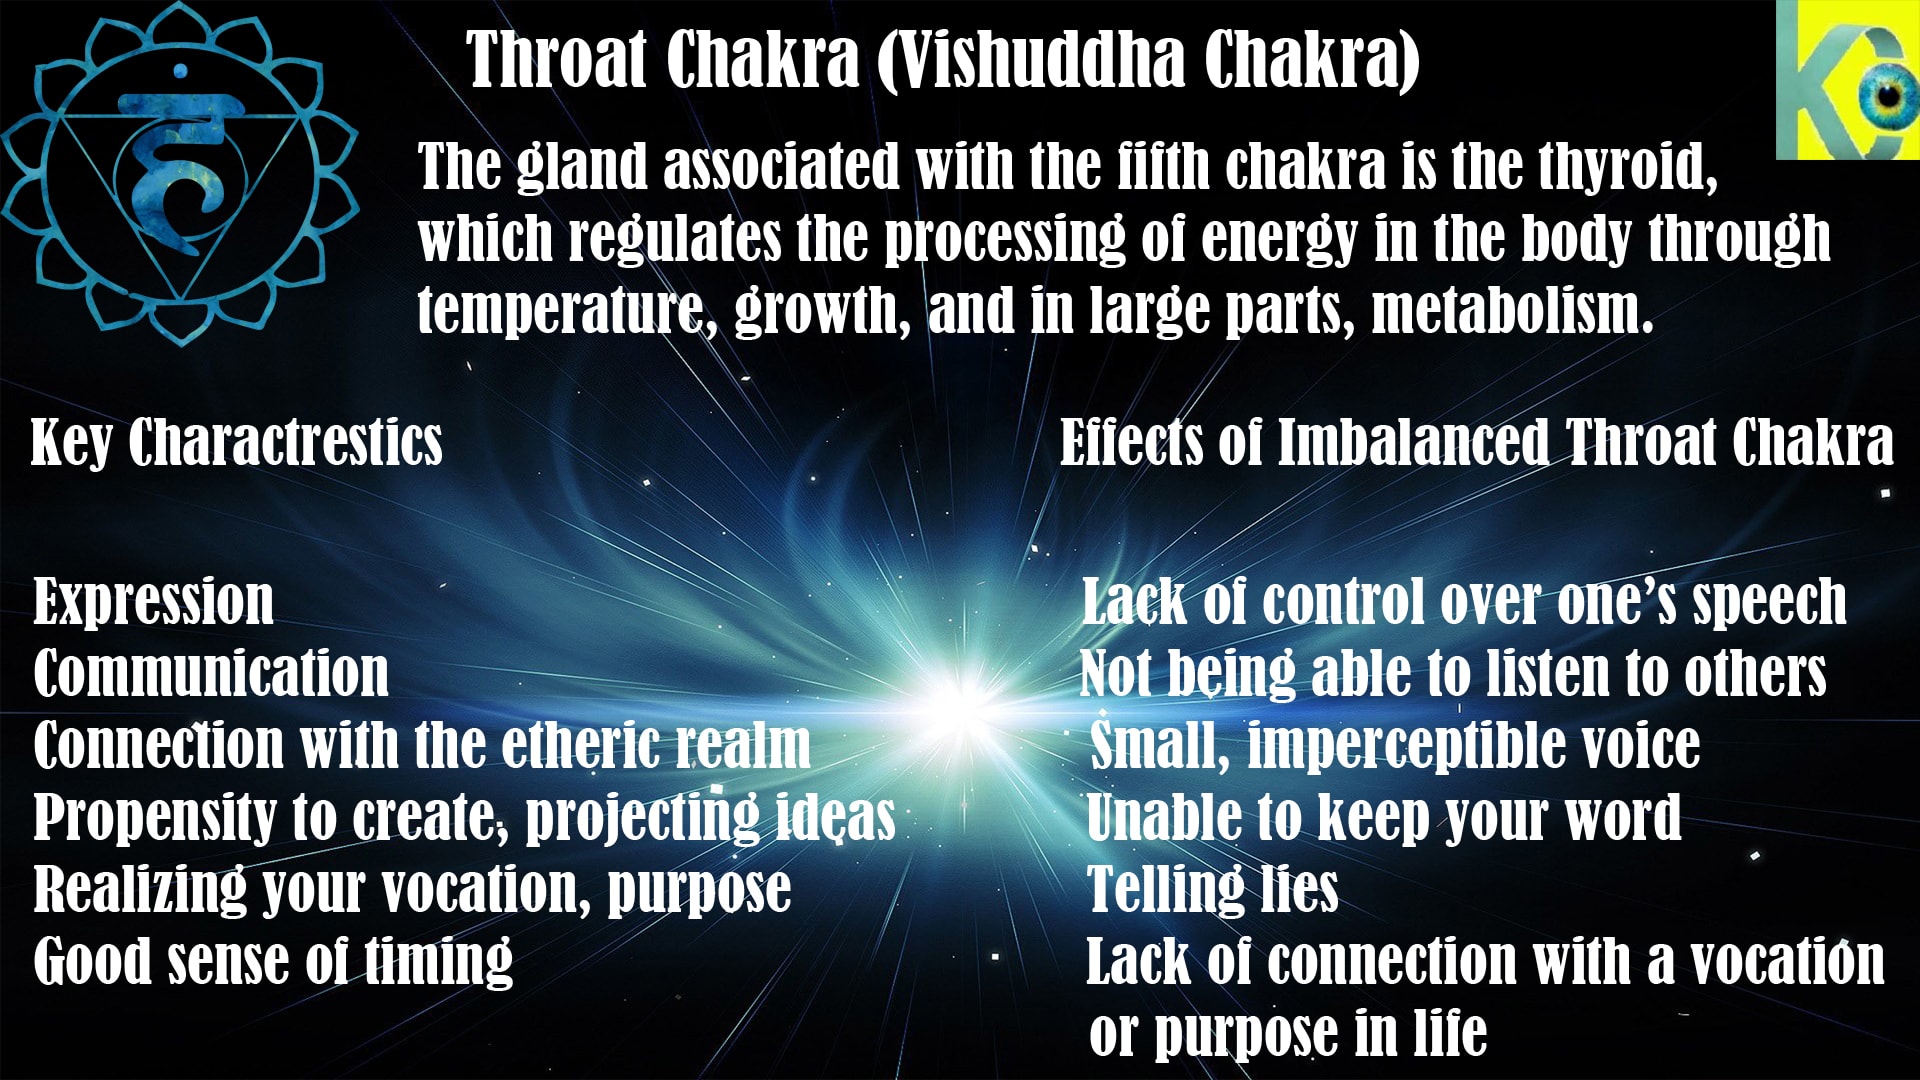 Thorat Chakra Its Charactrestics and Its Effects